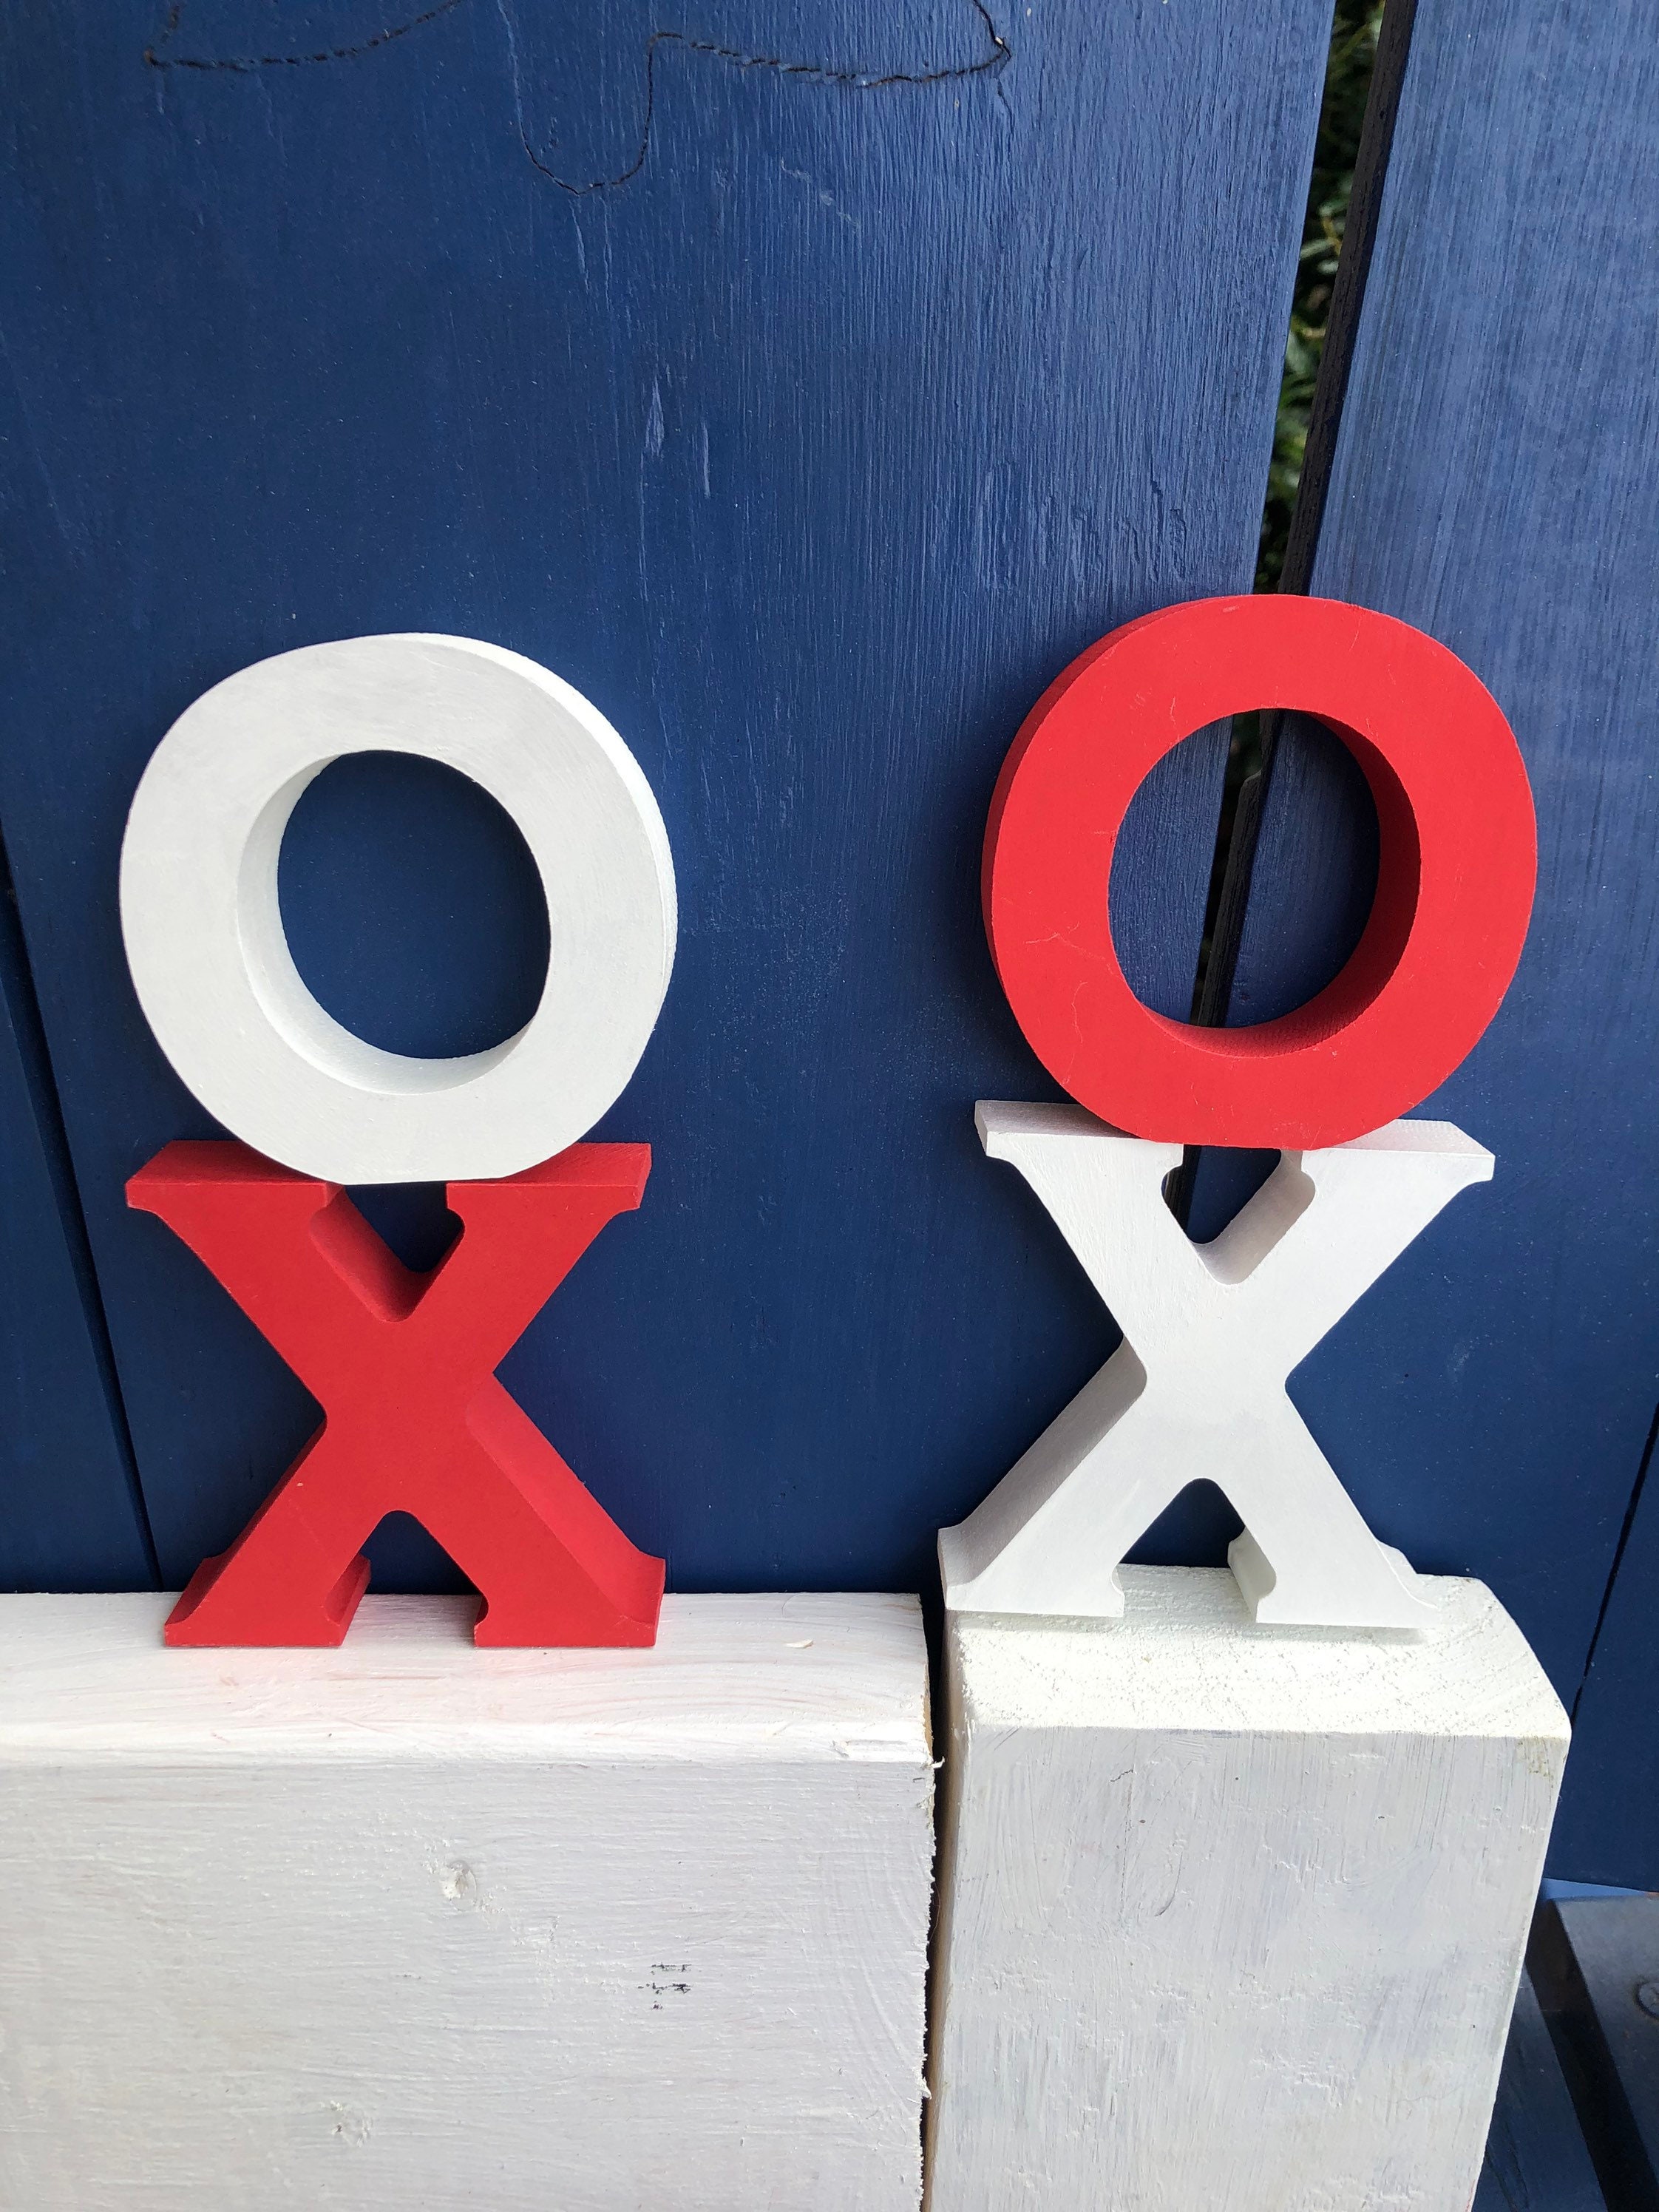 XO Wooden Decorative Letters - Home Decor - 2 Pieces, 13784219